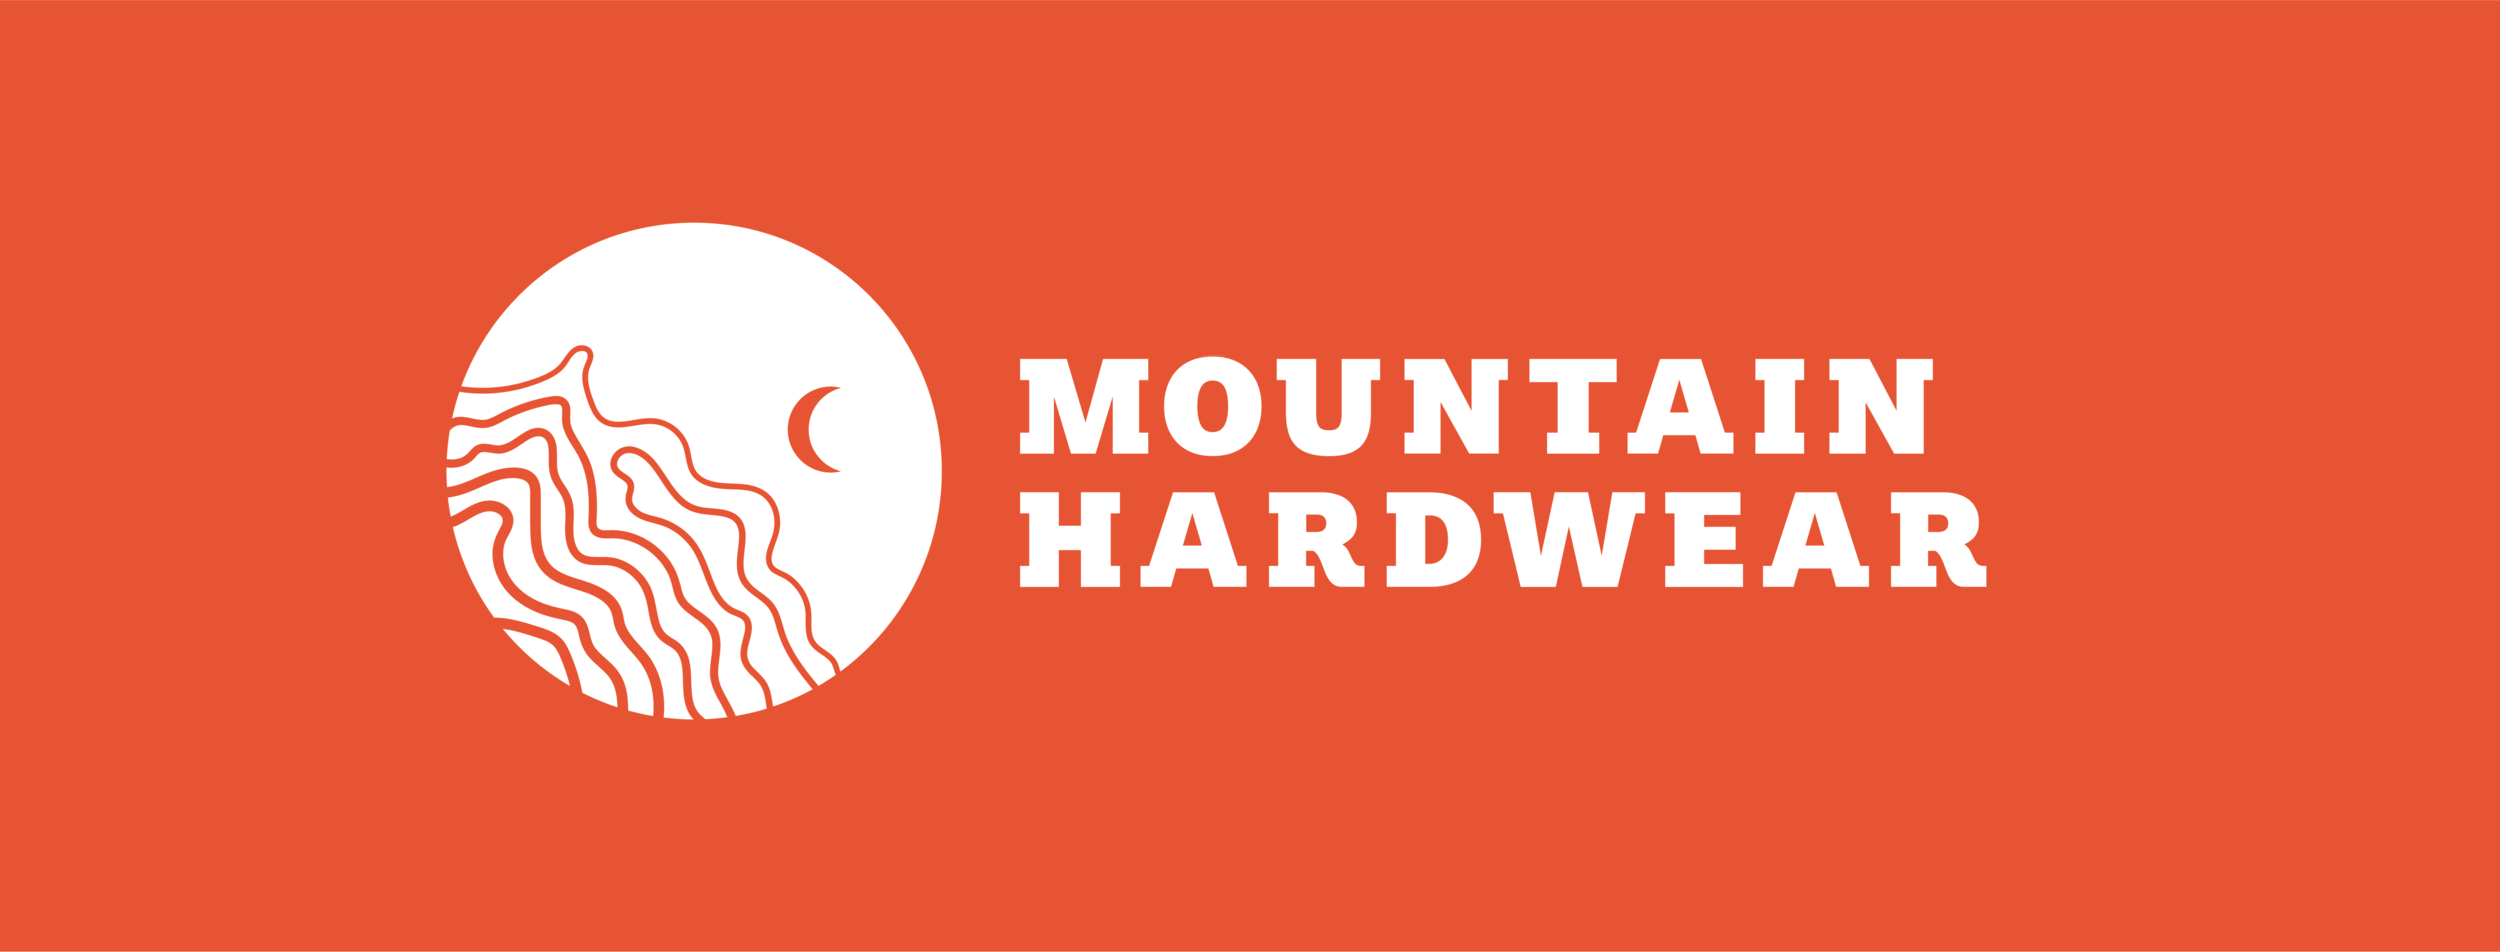 Summiting Logo Mountain: Process for Mountain Hardwear Rebrand ...